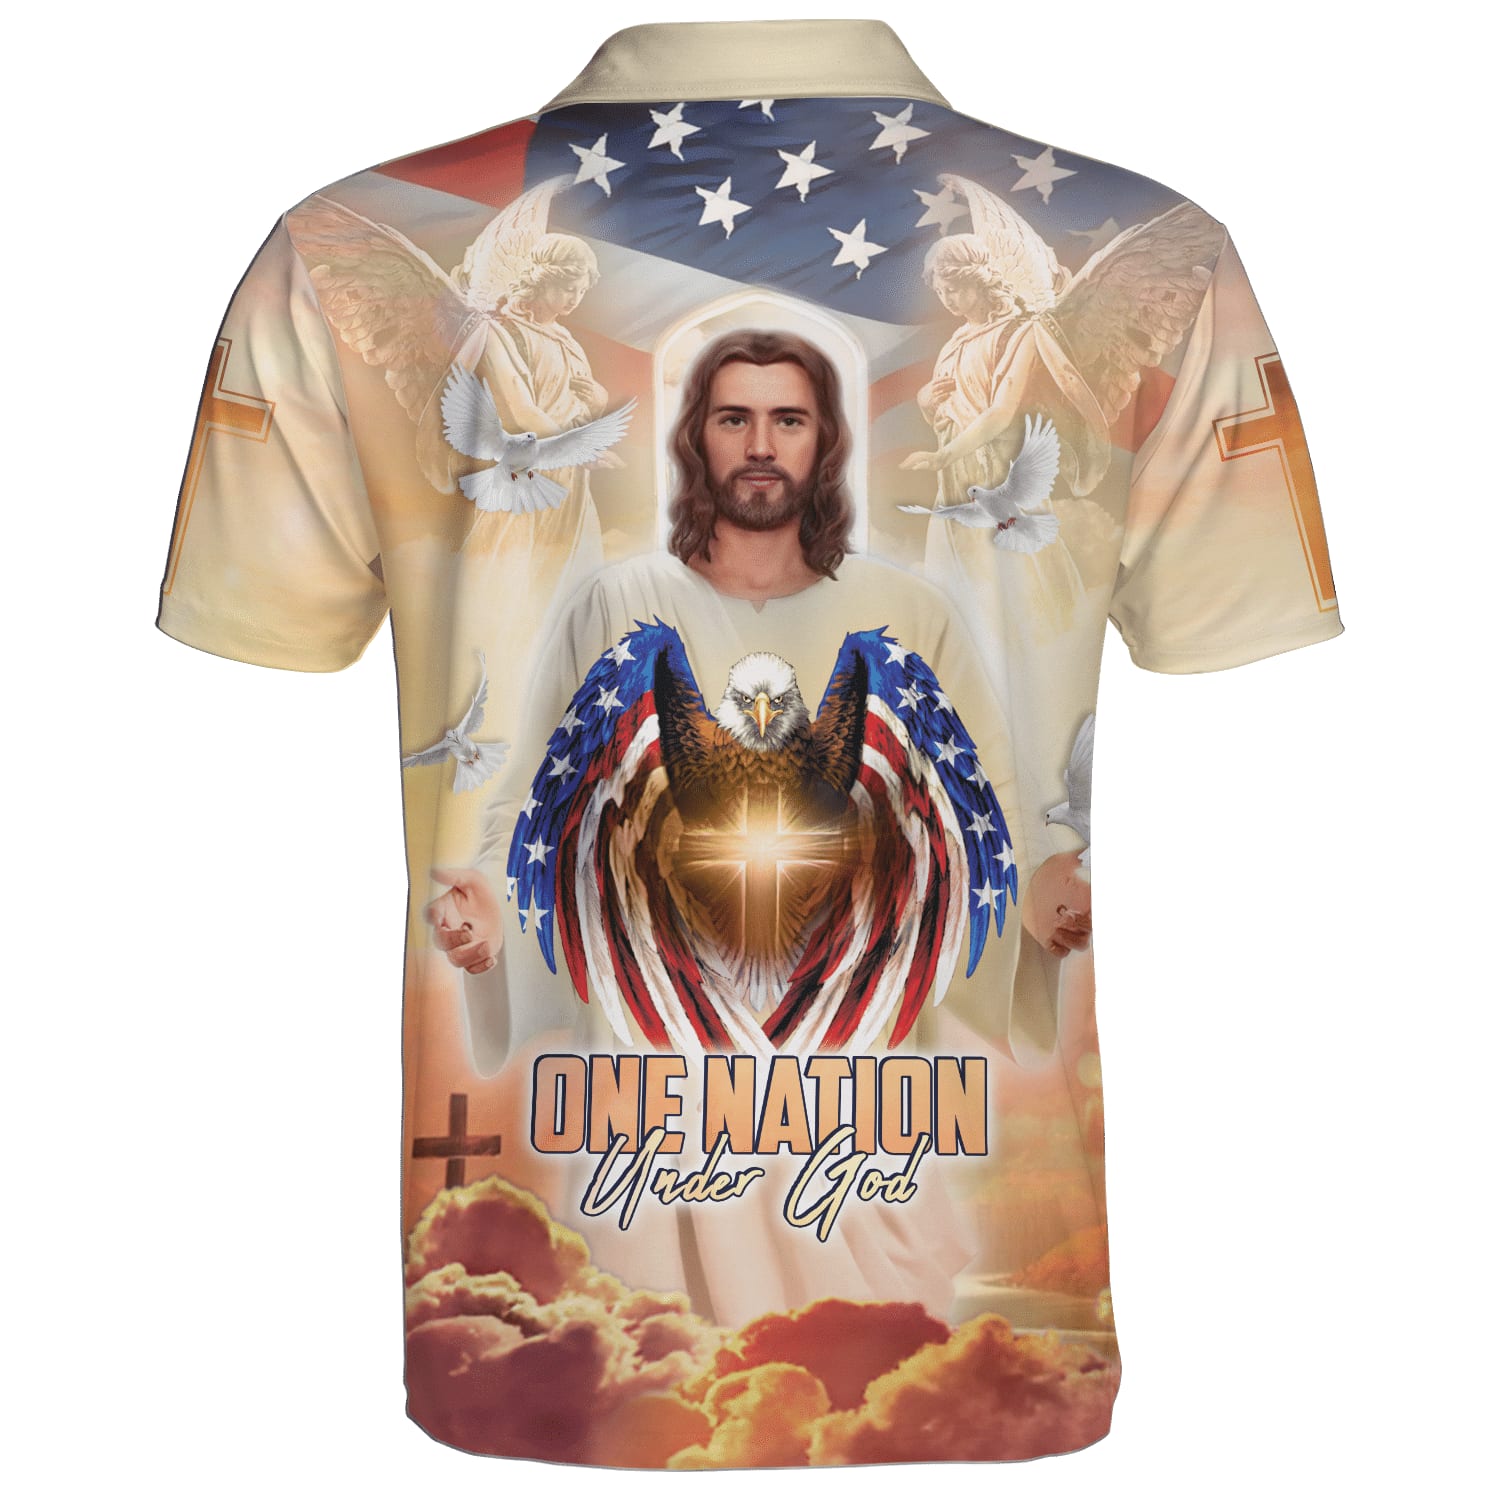 One Natiom Under God Jesus And Eagle American Polo Shirt - Christian Shirts & Shorts